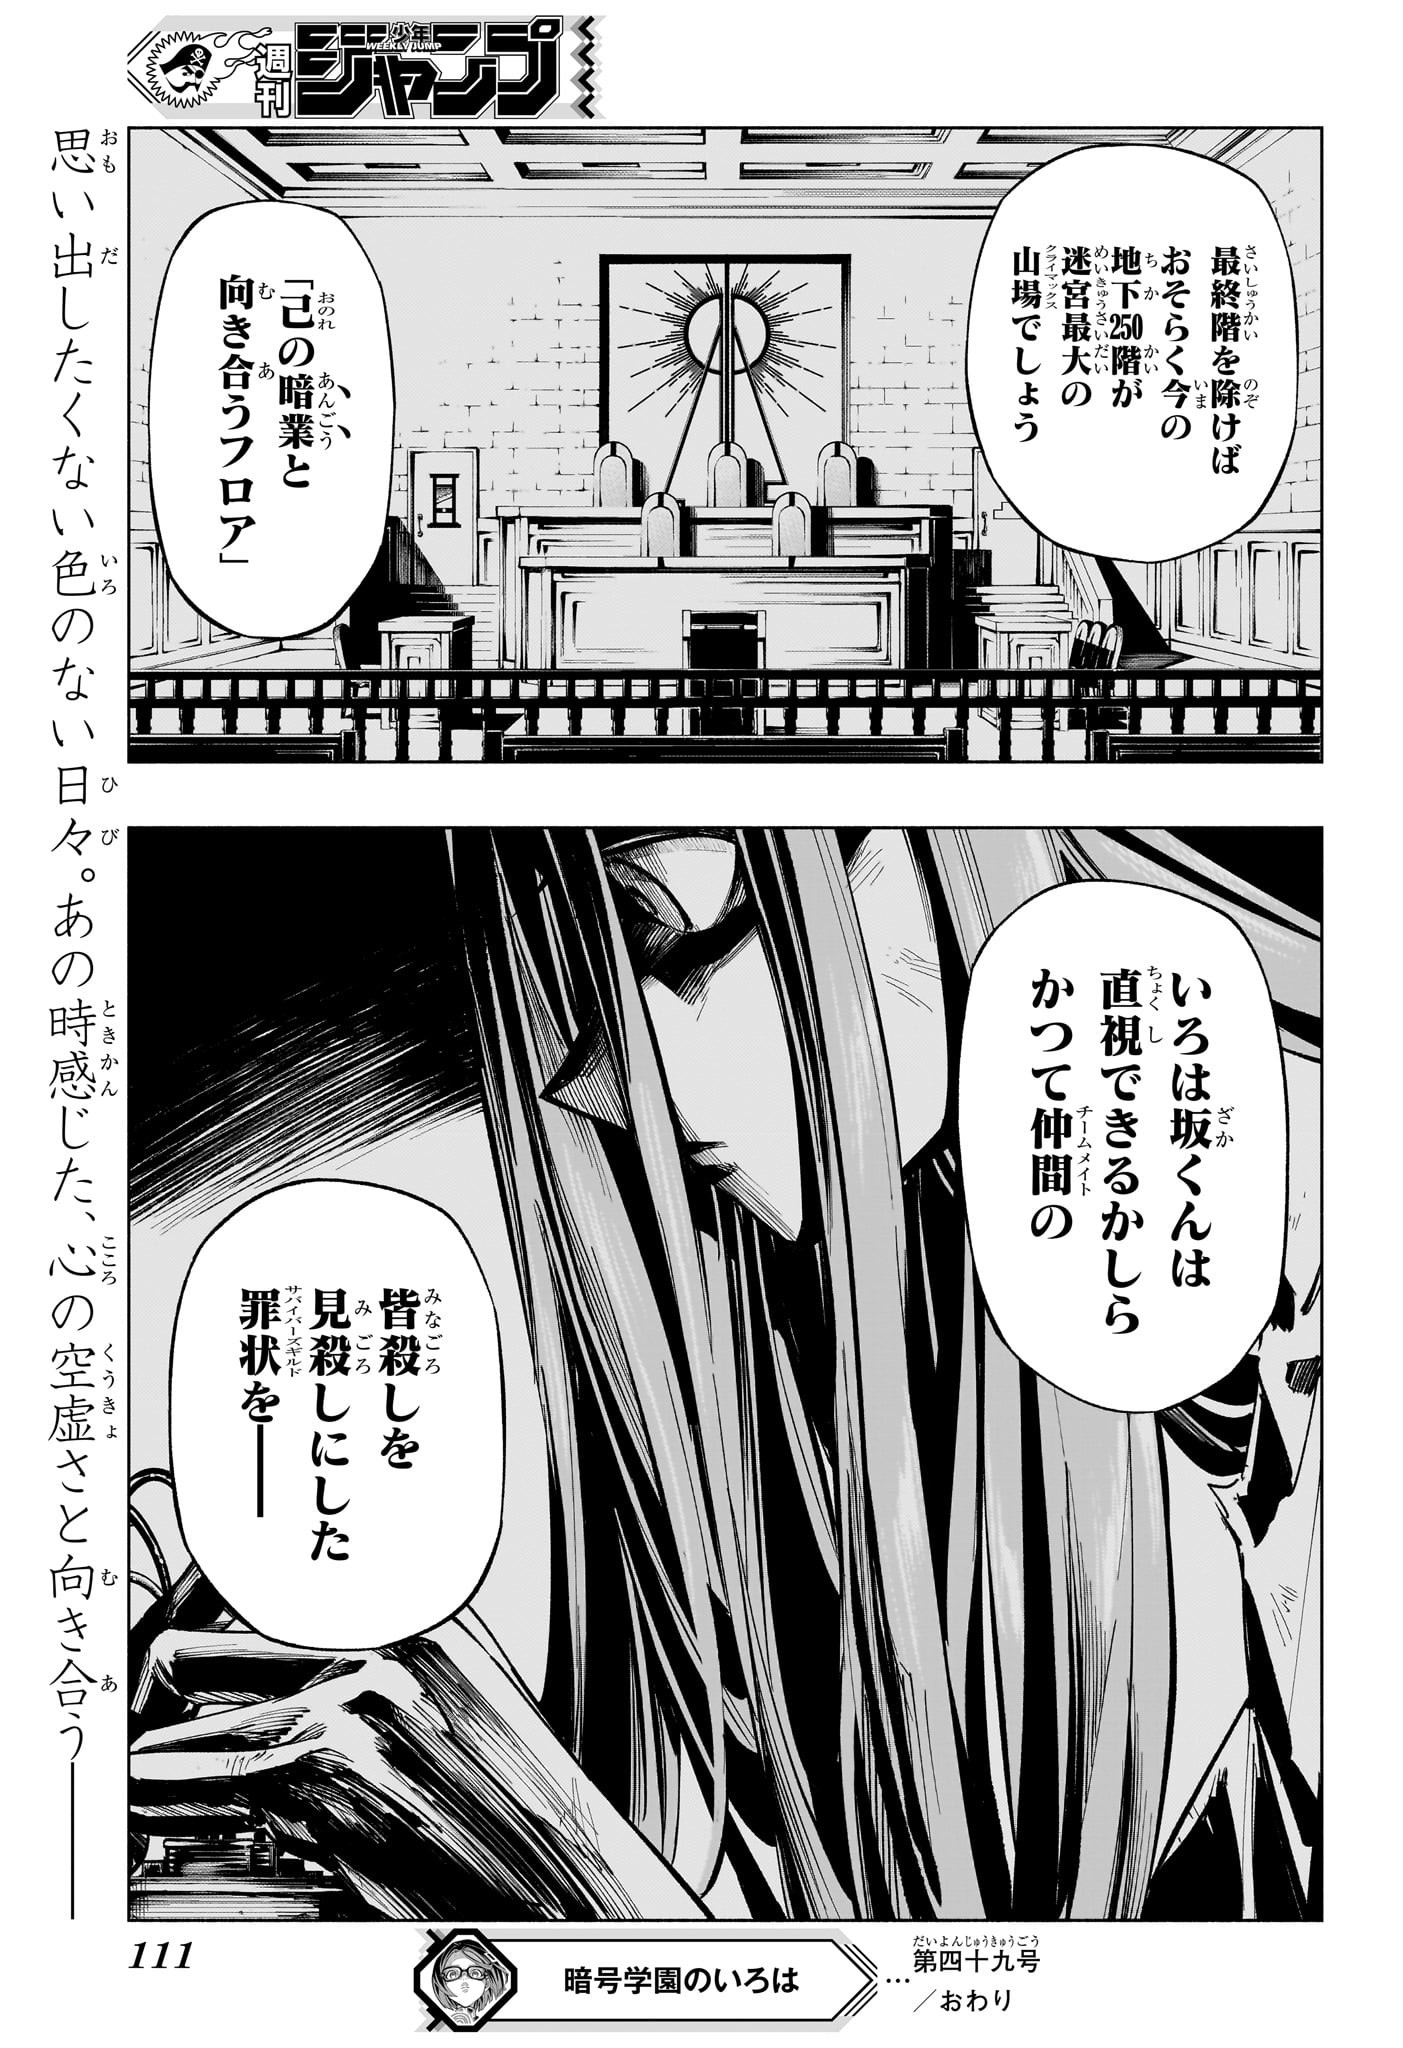 Angou Gakuen no Iroha - Chapter 49 - Page 22